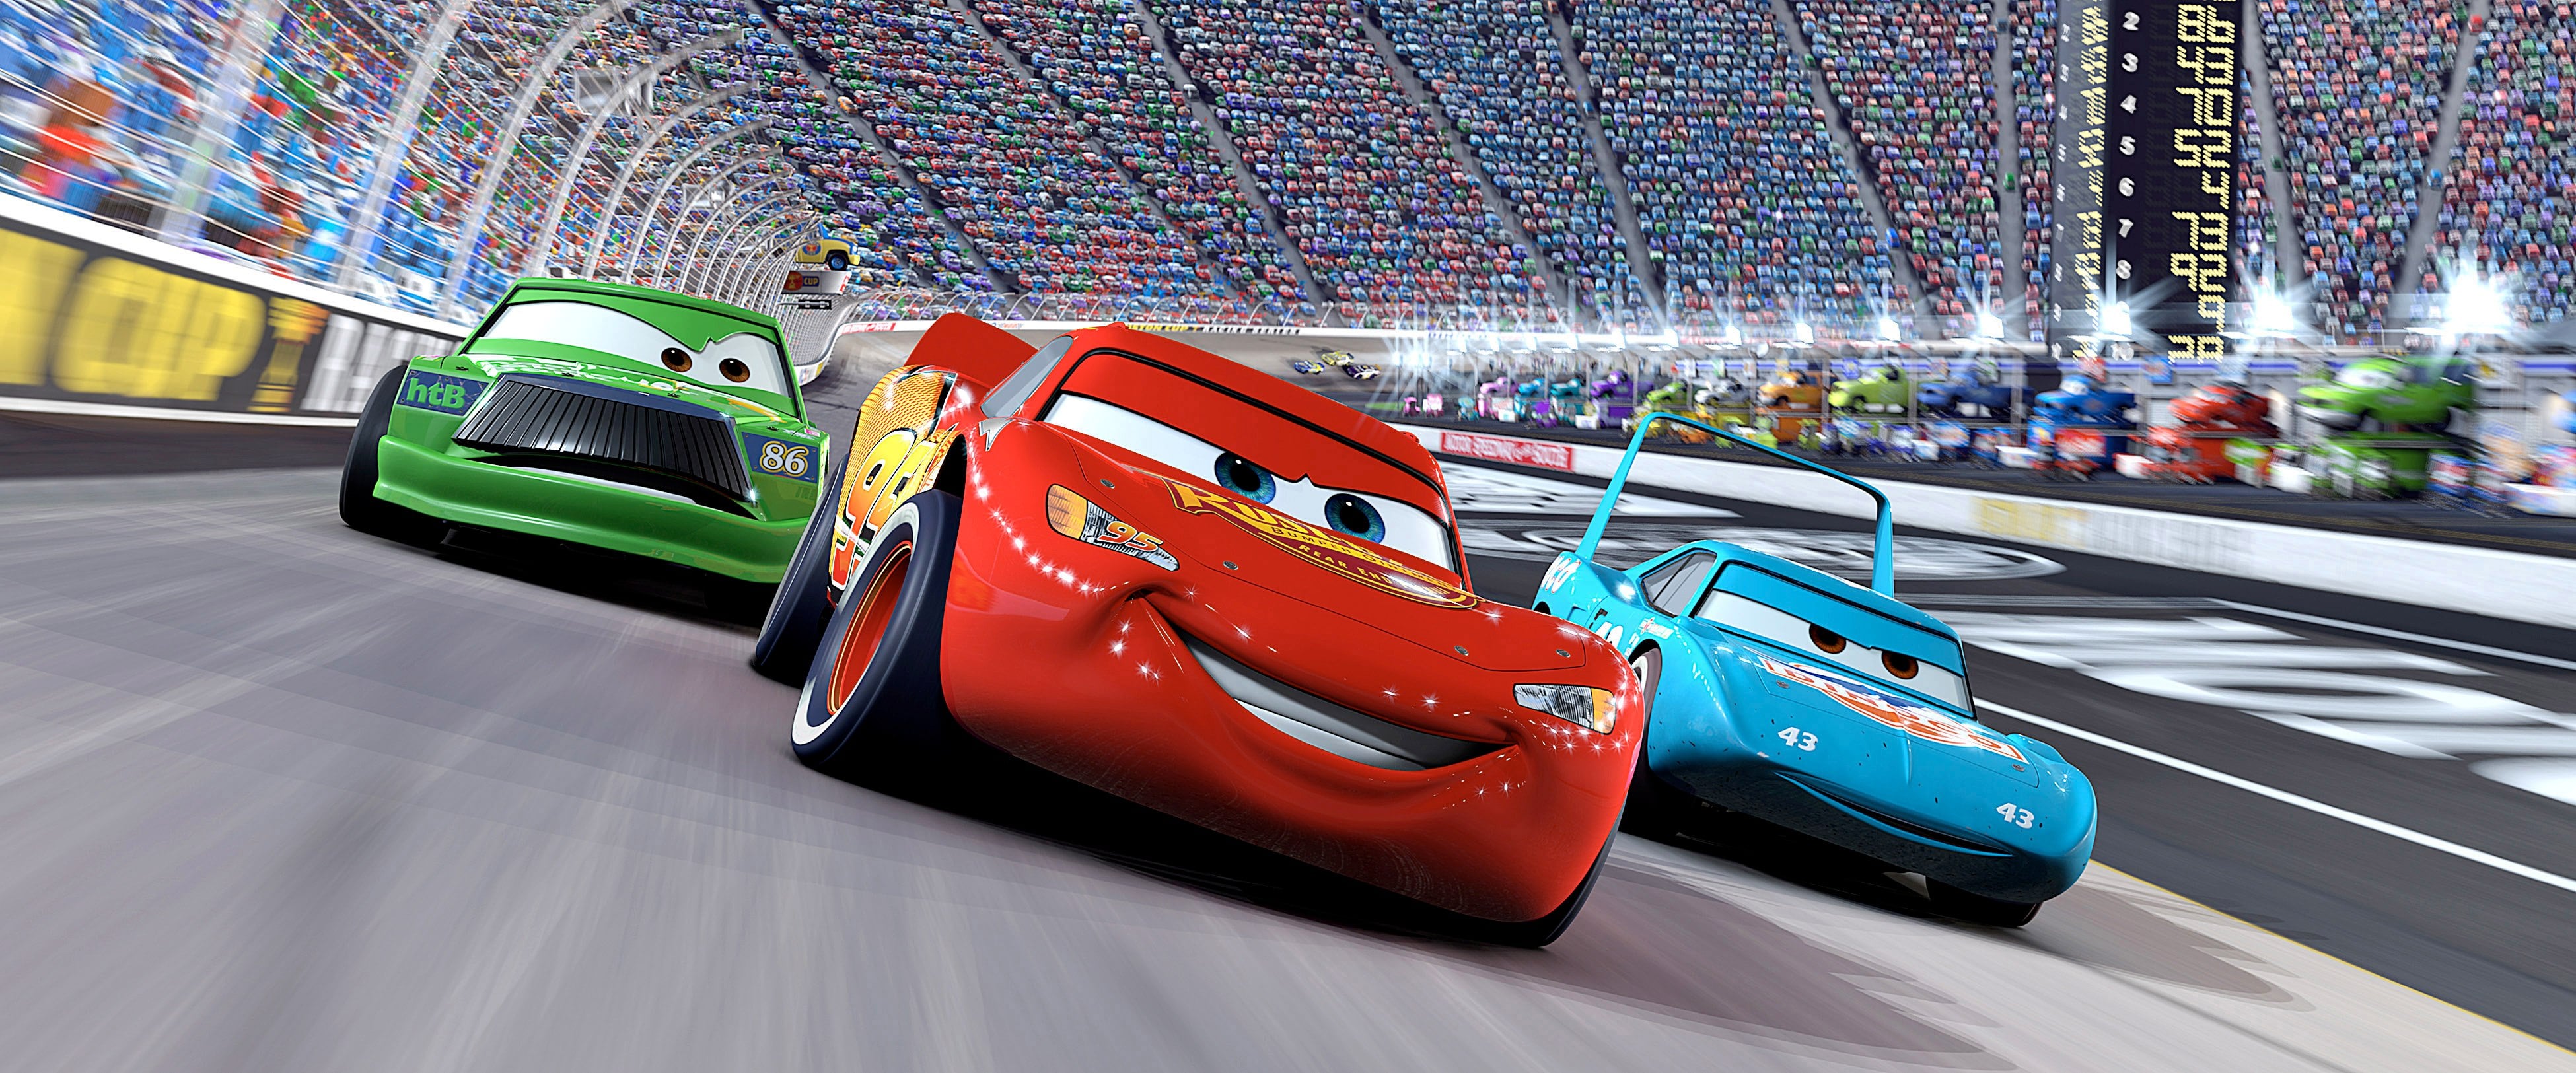 Lightning McQueen's Racing Academy – Disney's Hollywood Studios